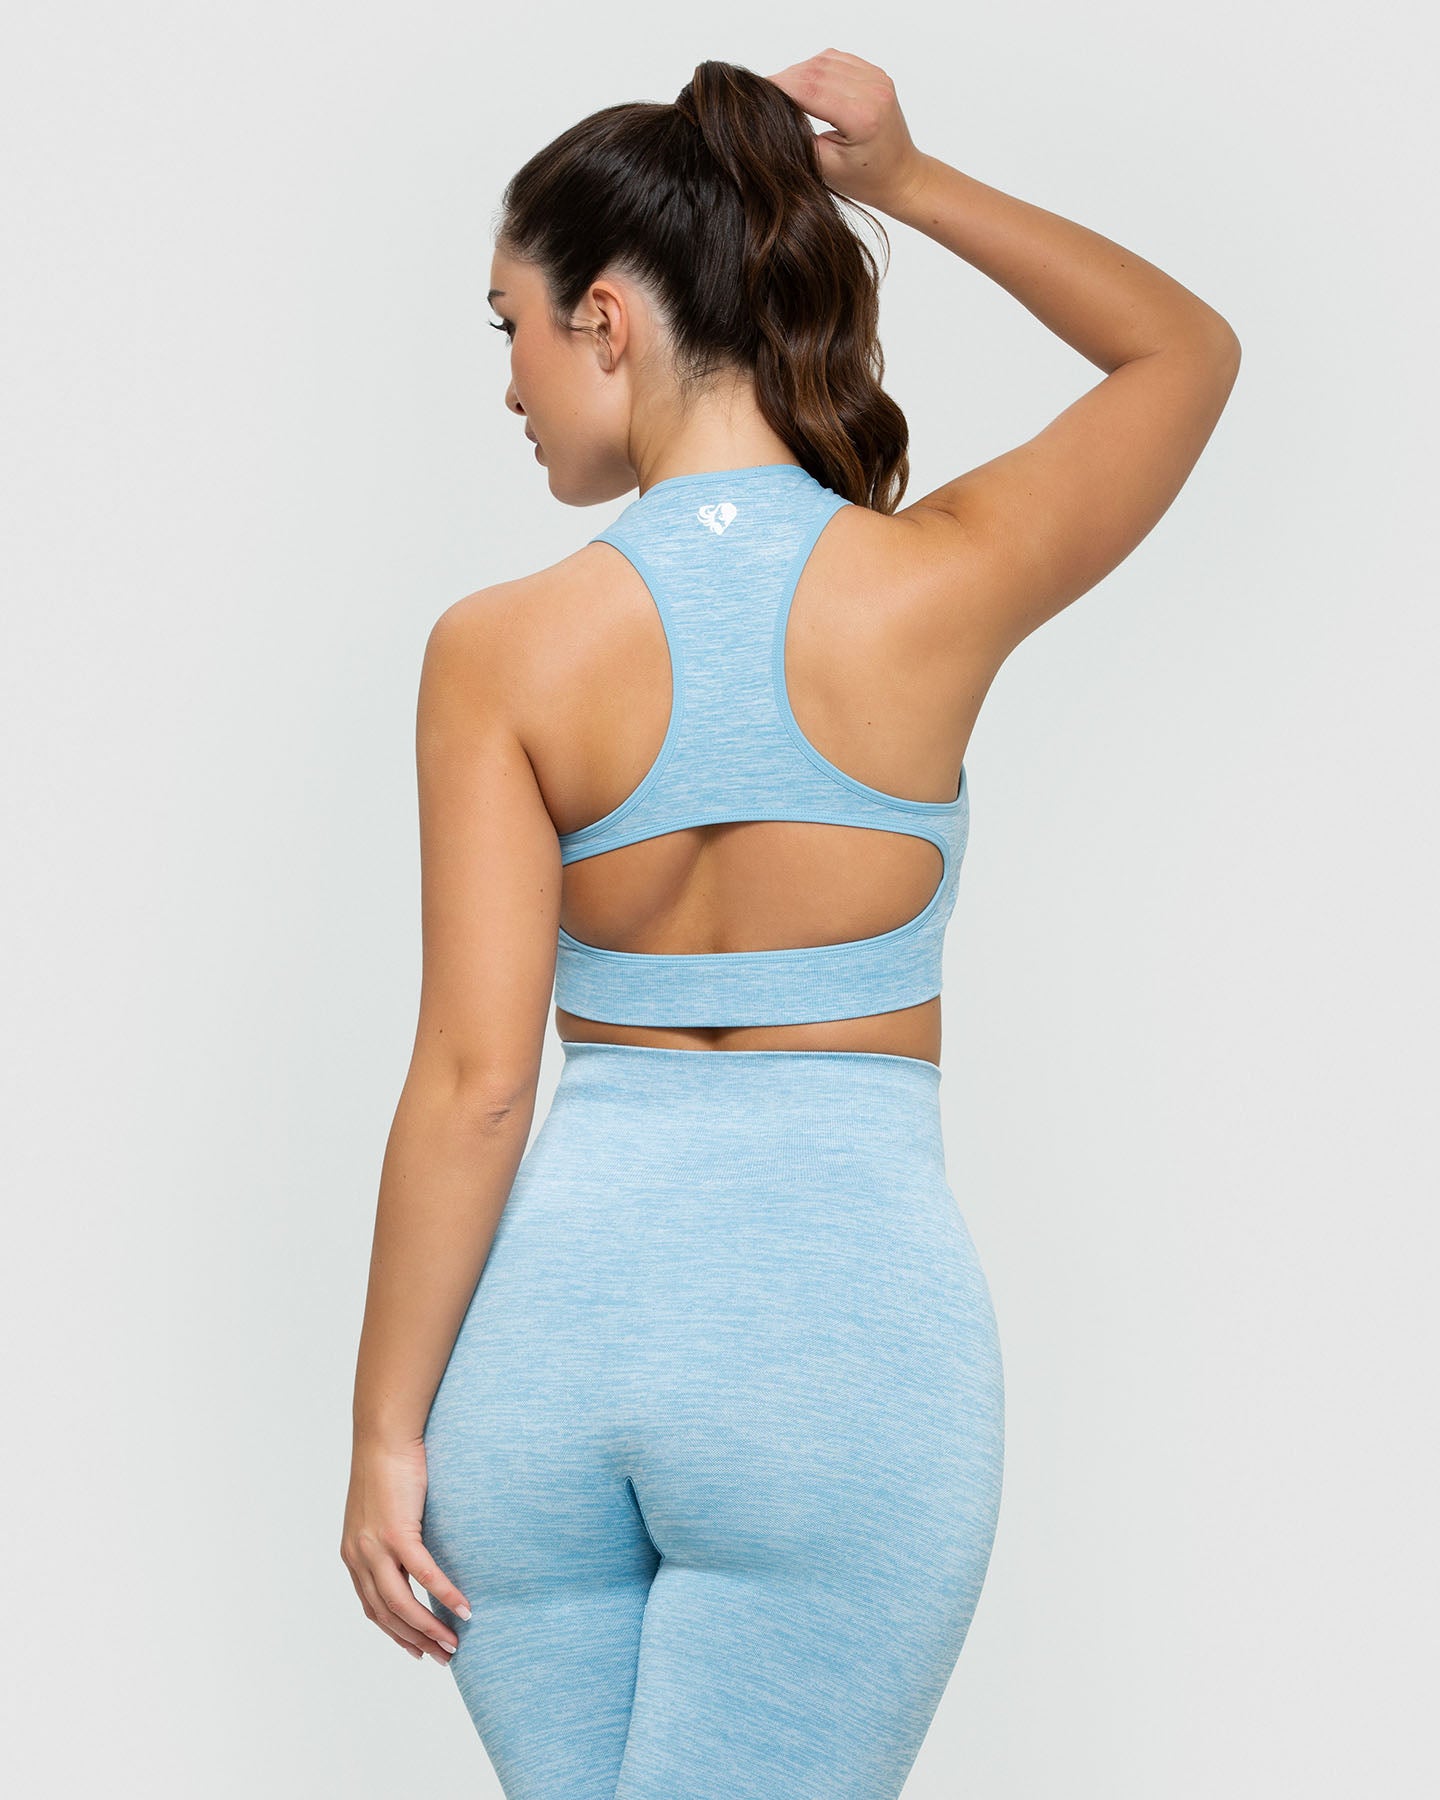 Women's Best - Jelly Devote is looking great in her #WomensBest INSPIRE  grey leggings 😍 Shop sportswear & supplements at our homepage www. womensbest.com